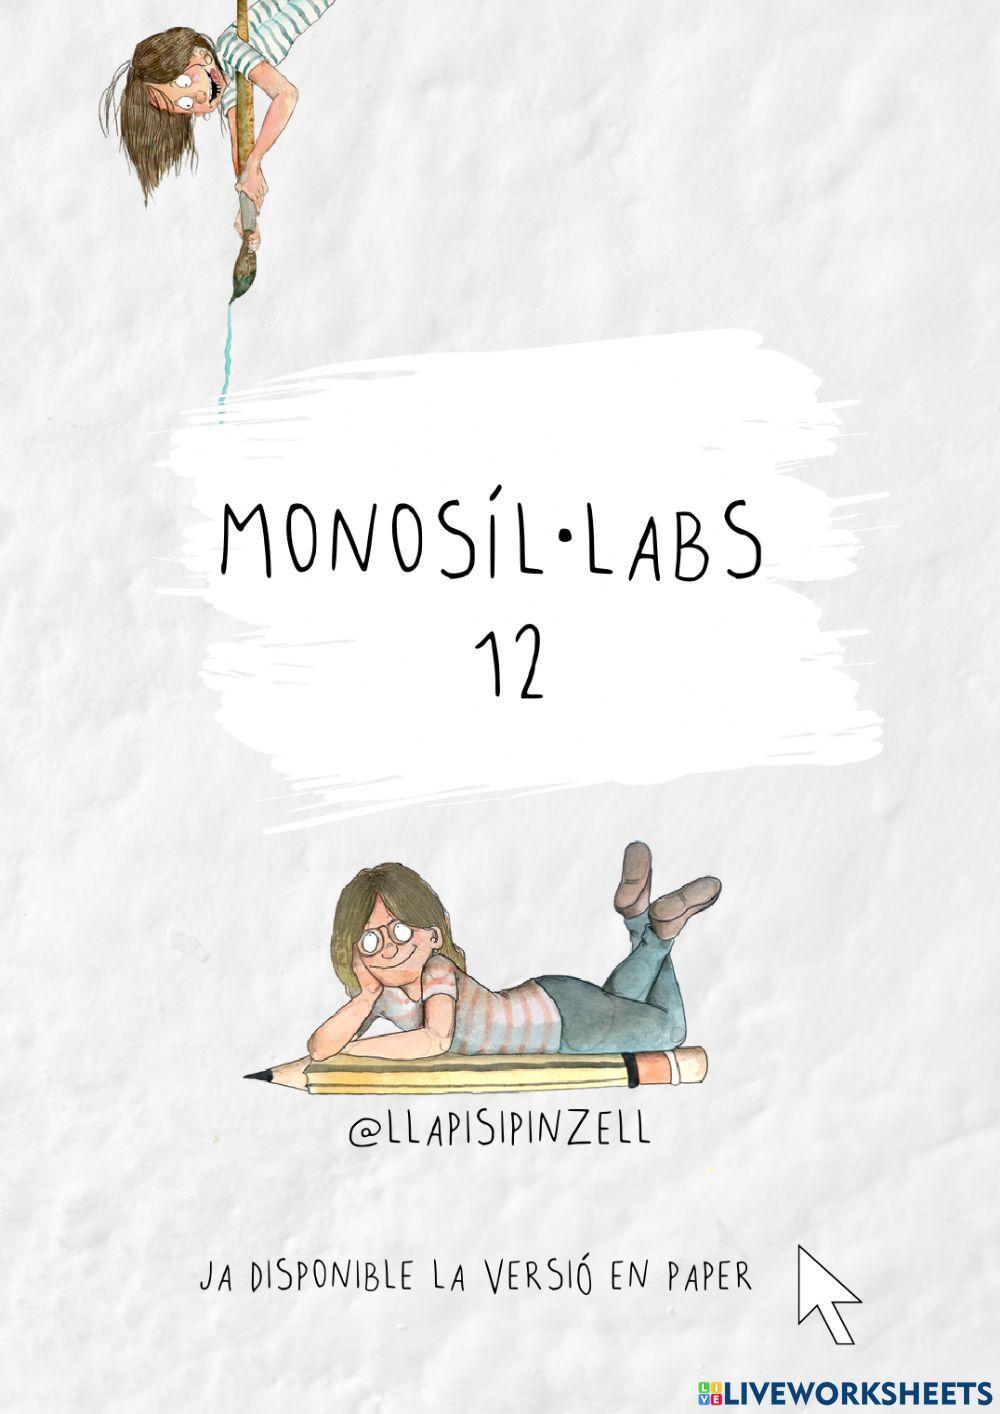 monosíl·labs 12